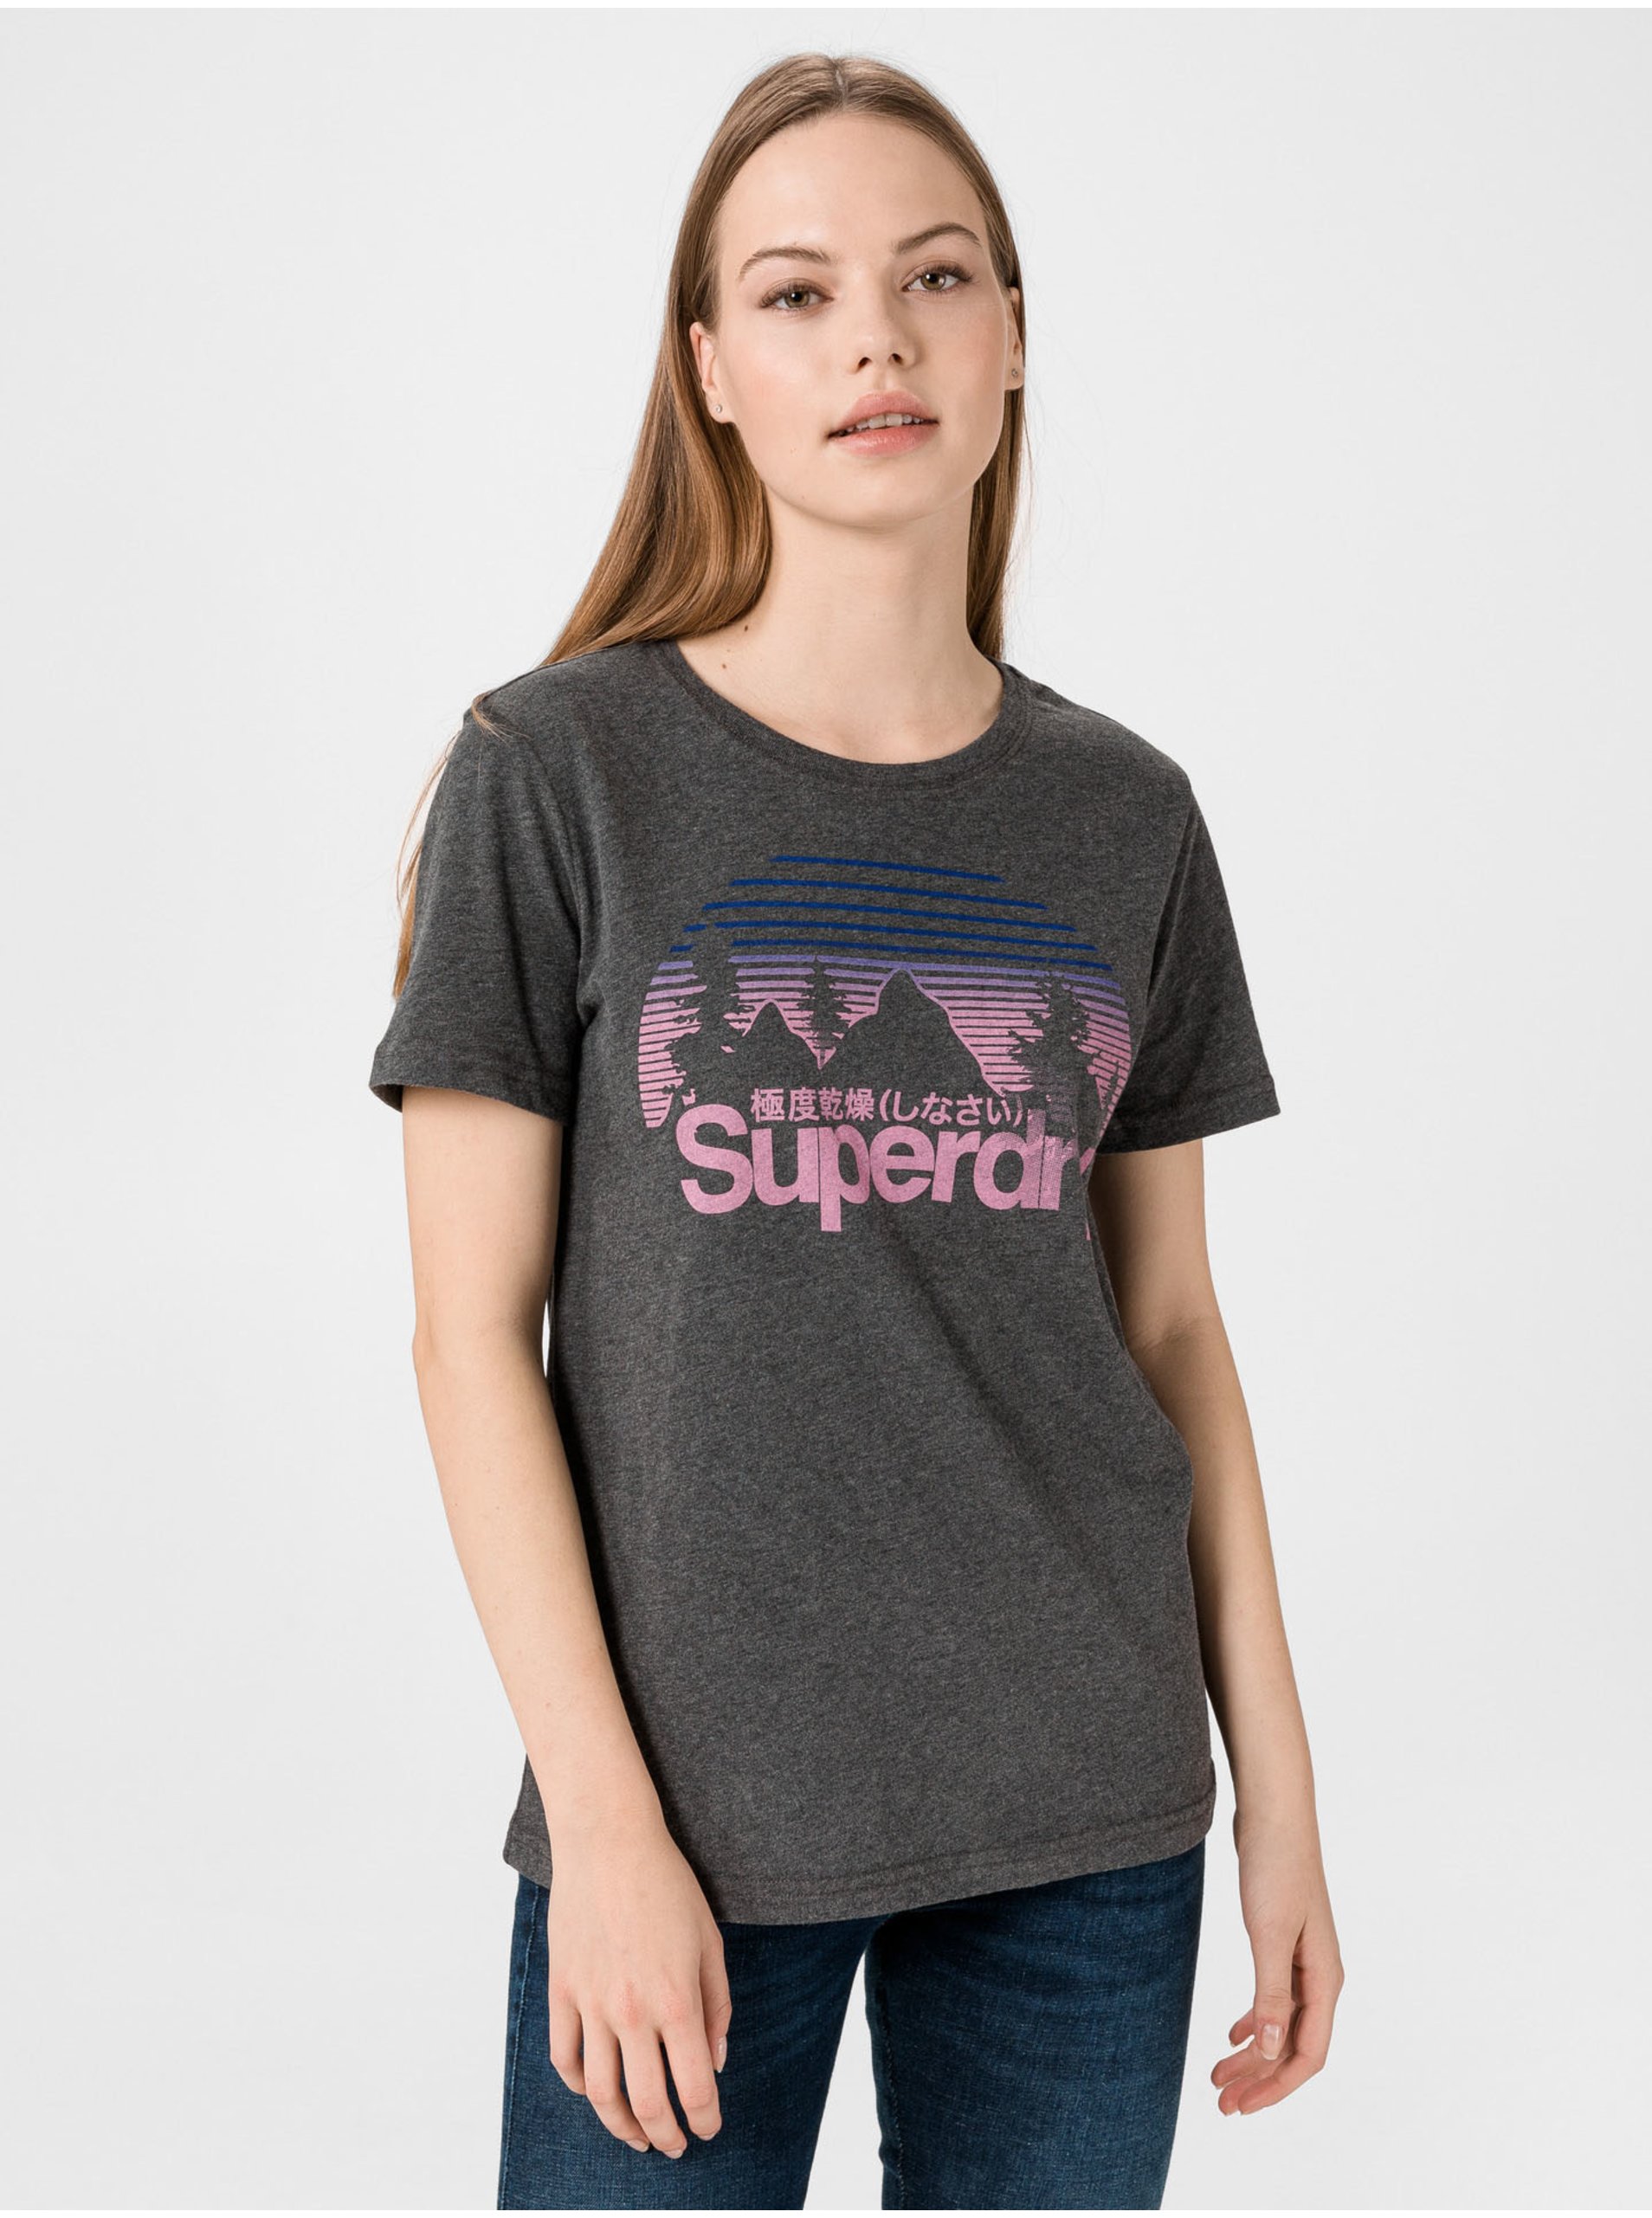 Lacno Wilderness tričko SuperDry